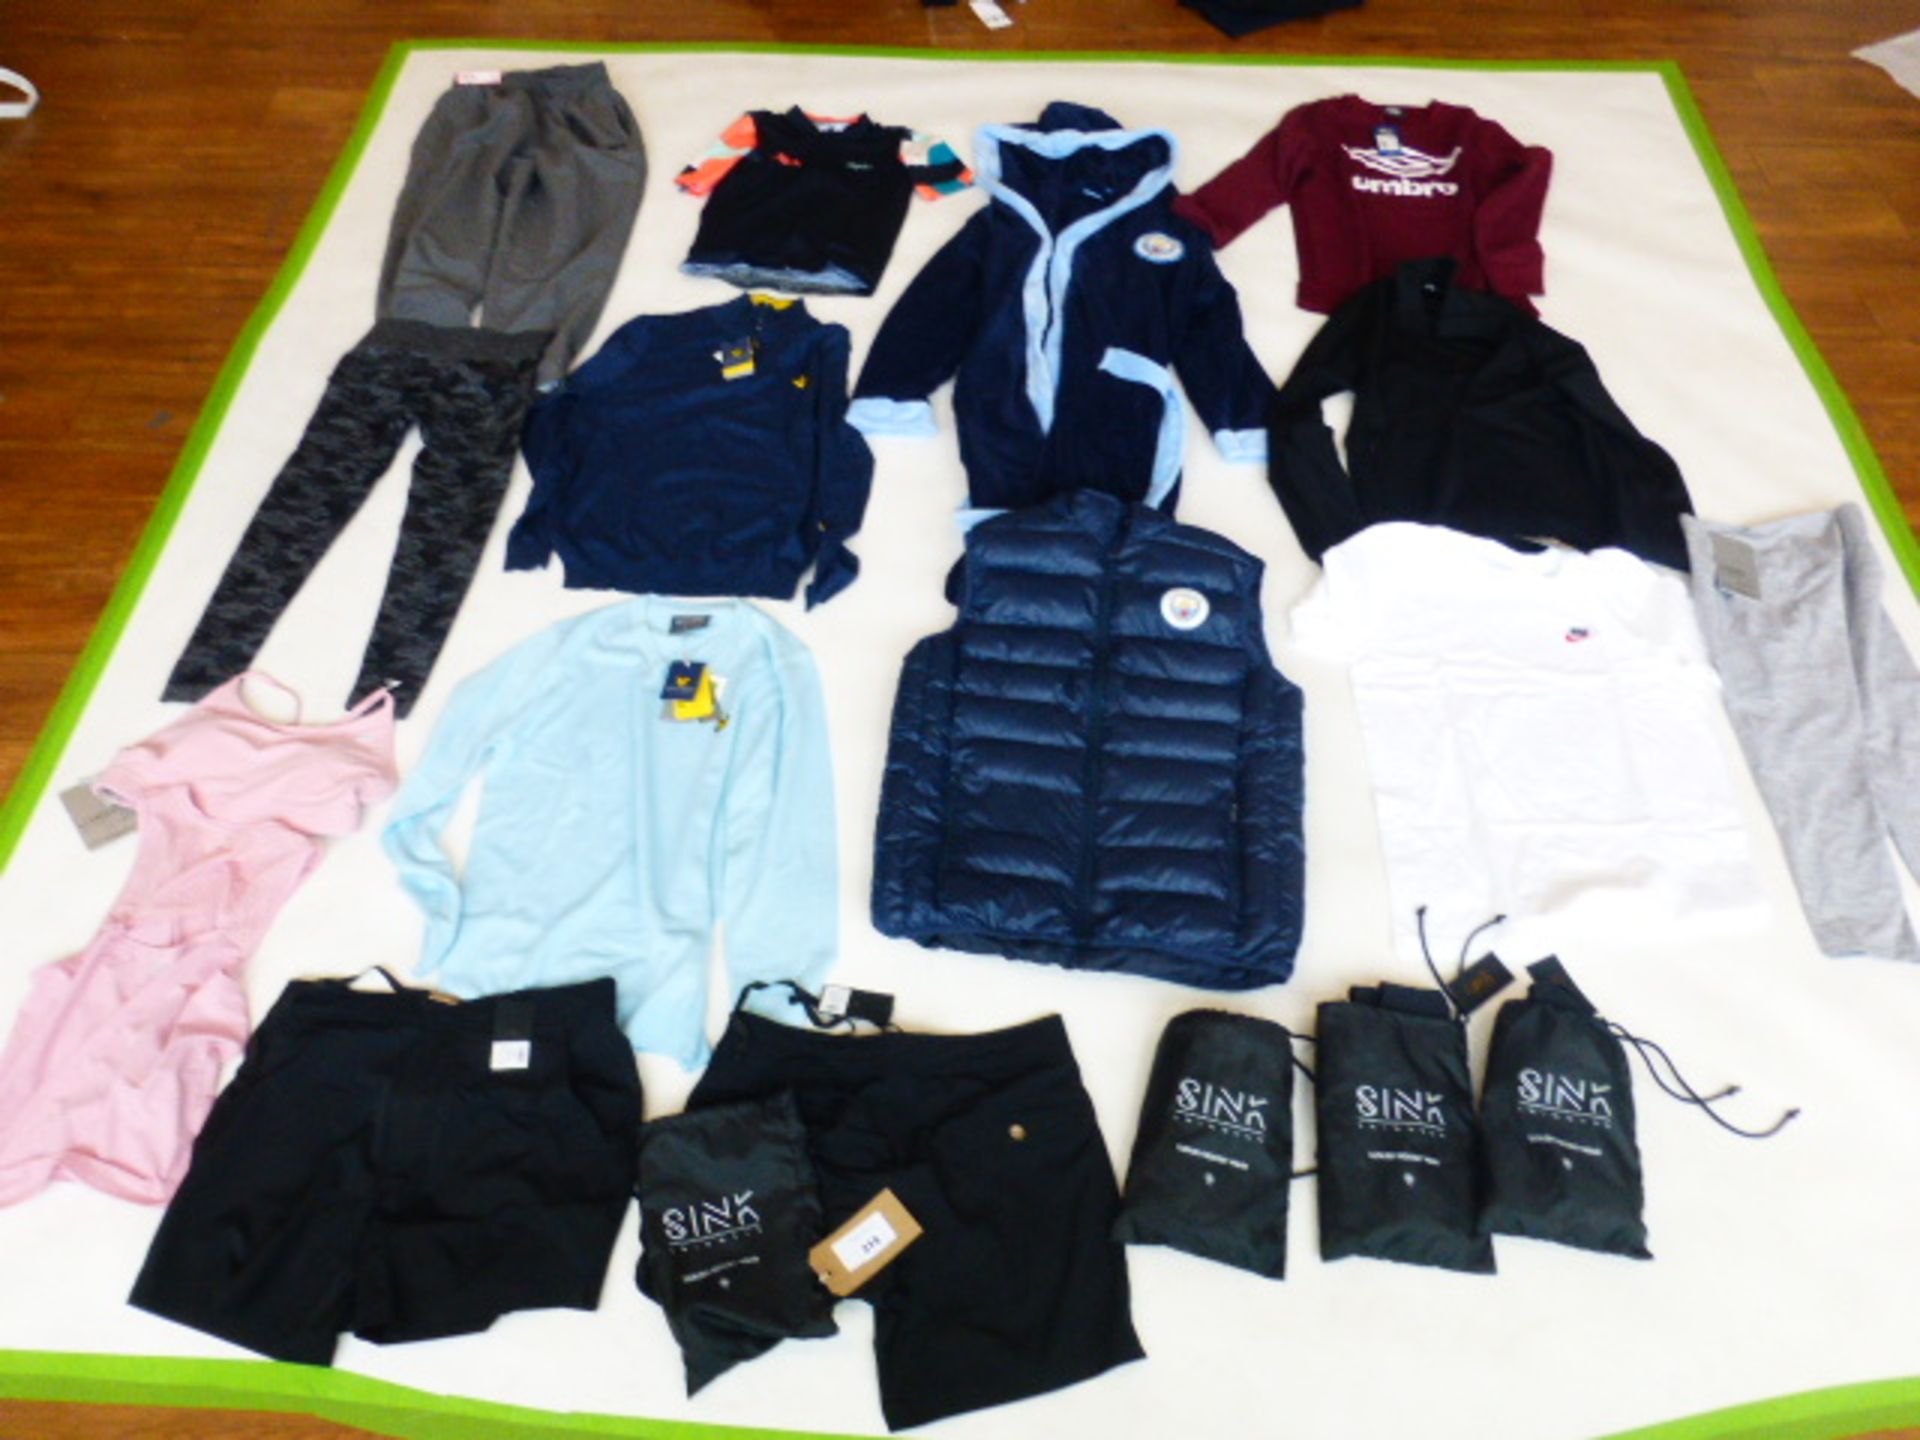 Selection of sportswear to include Lyle & Scott, Slazenger, Umbro, etc